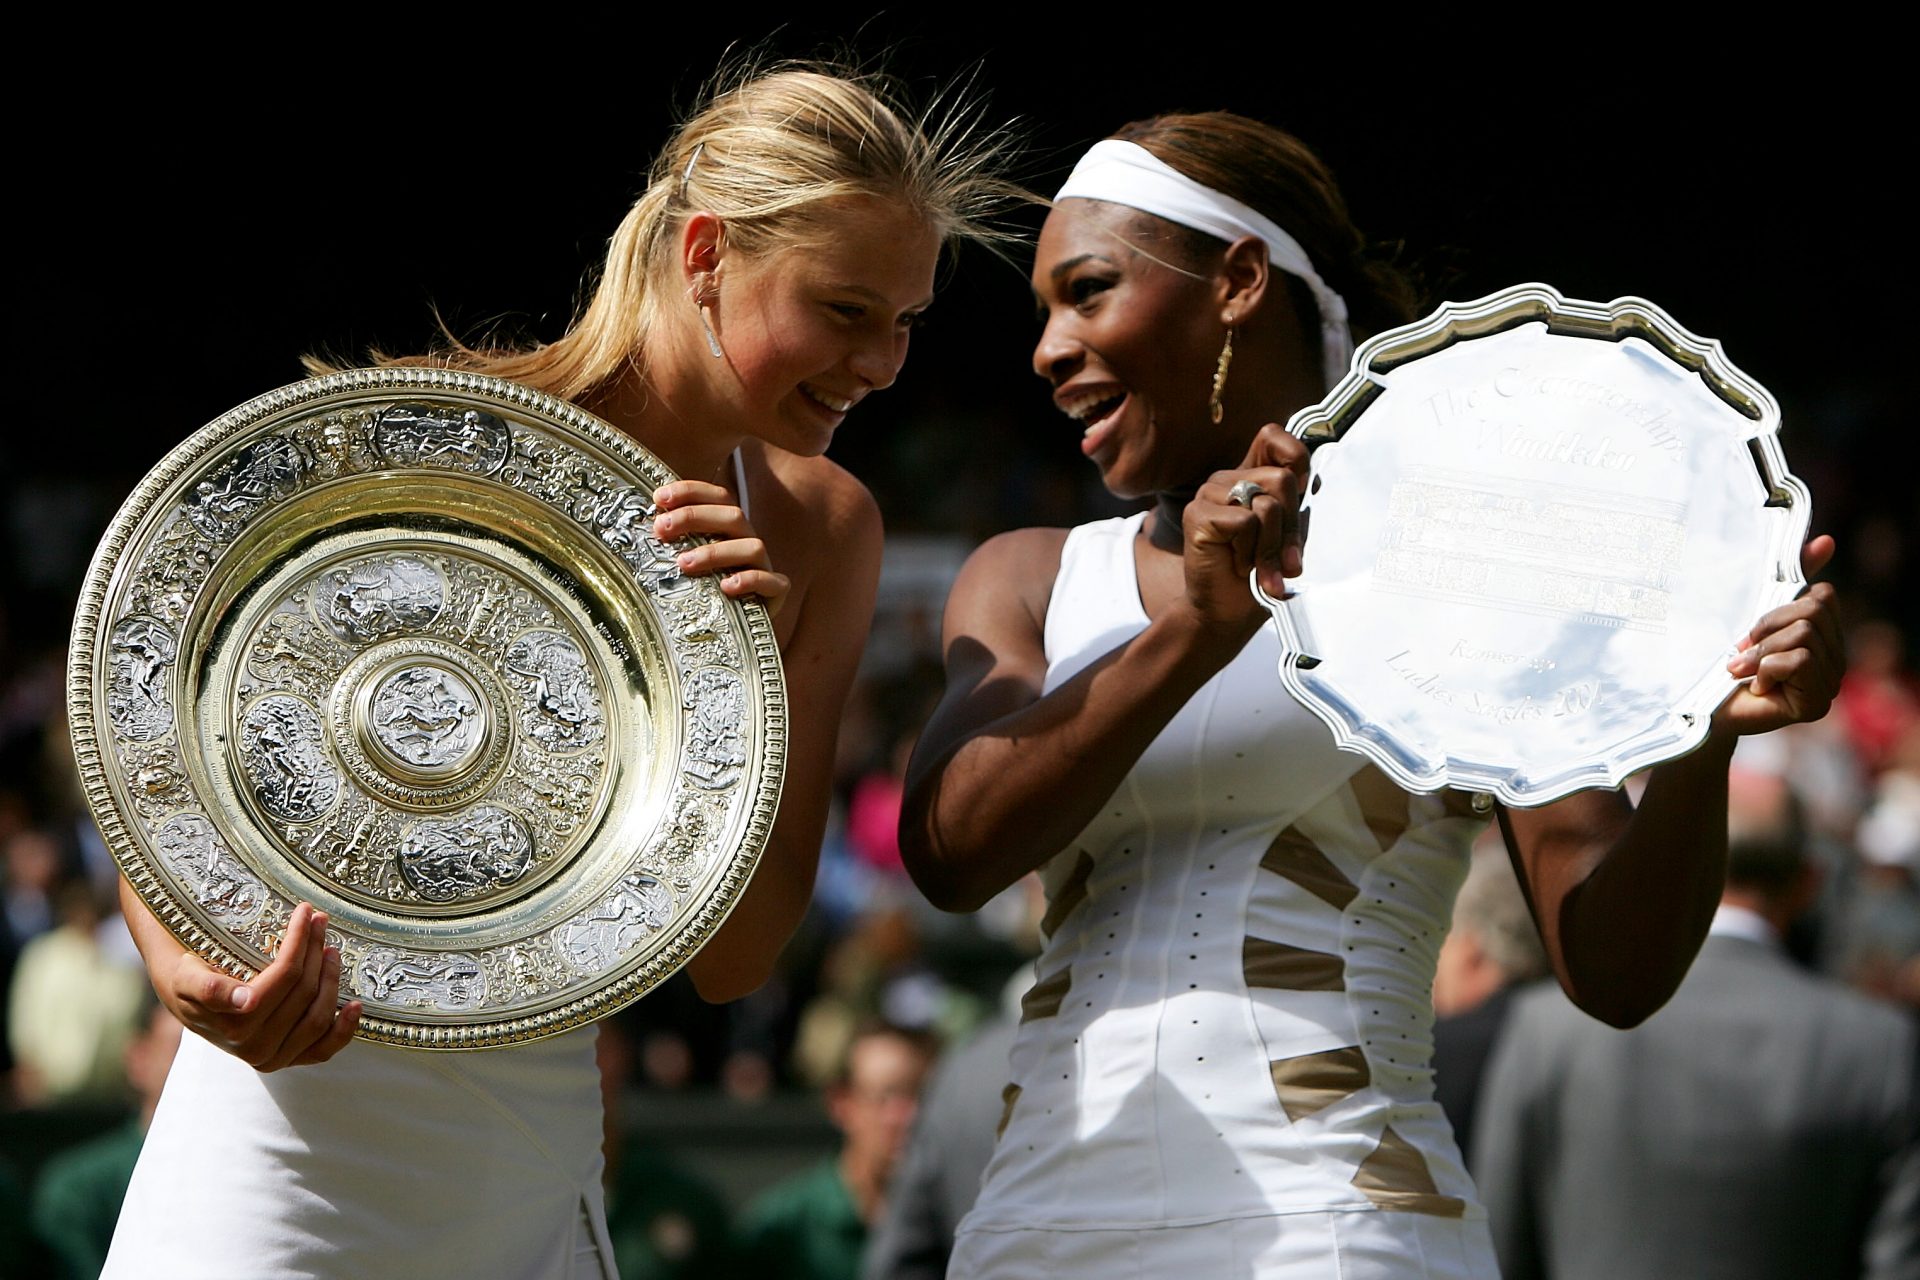 Beating Serena Williams